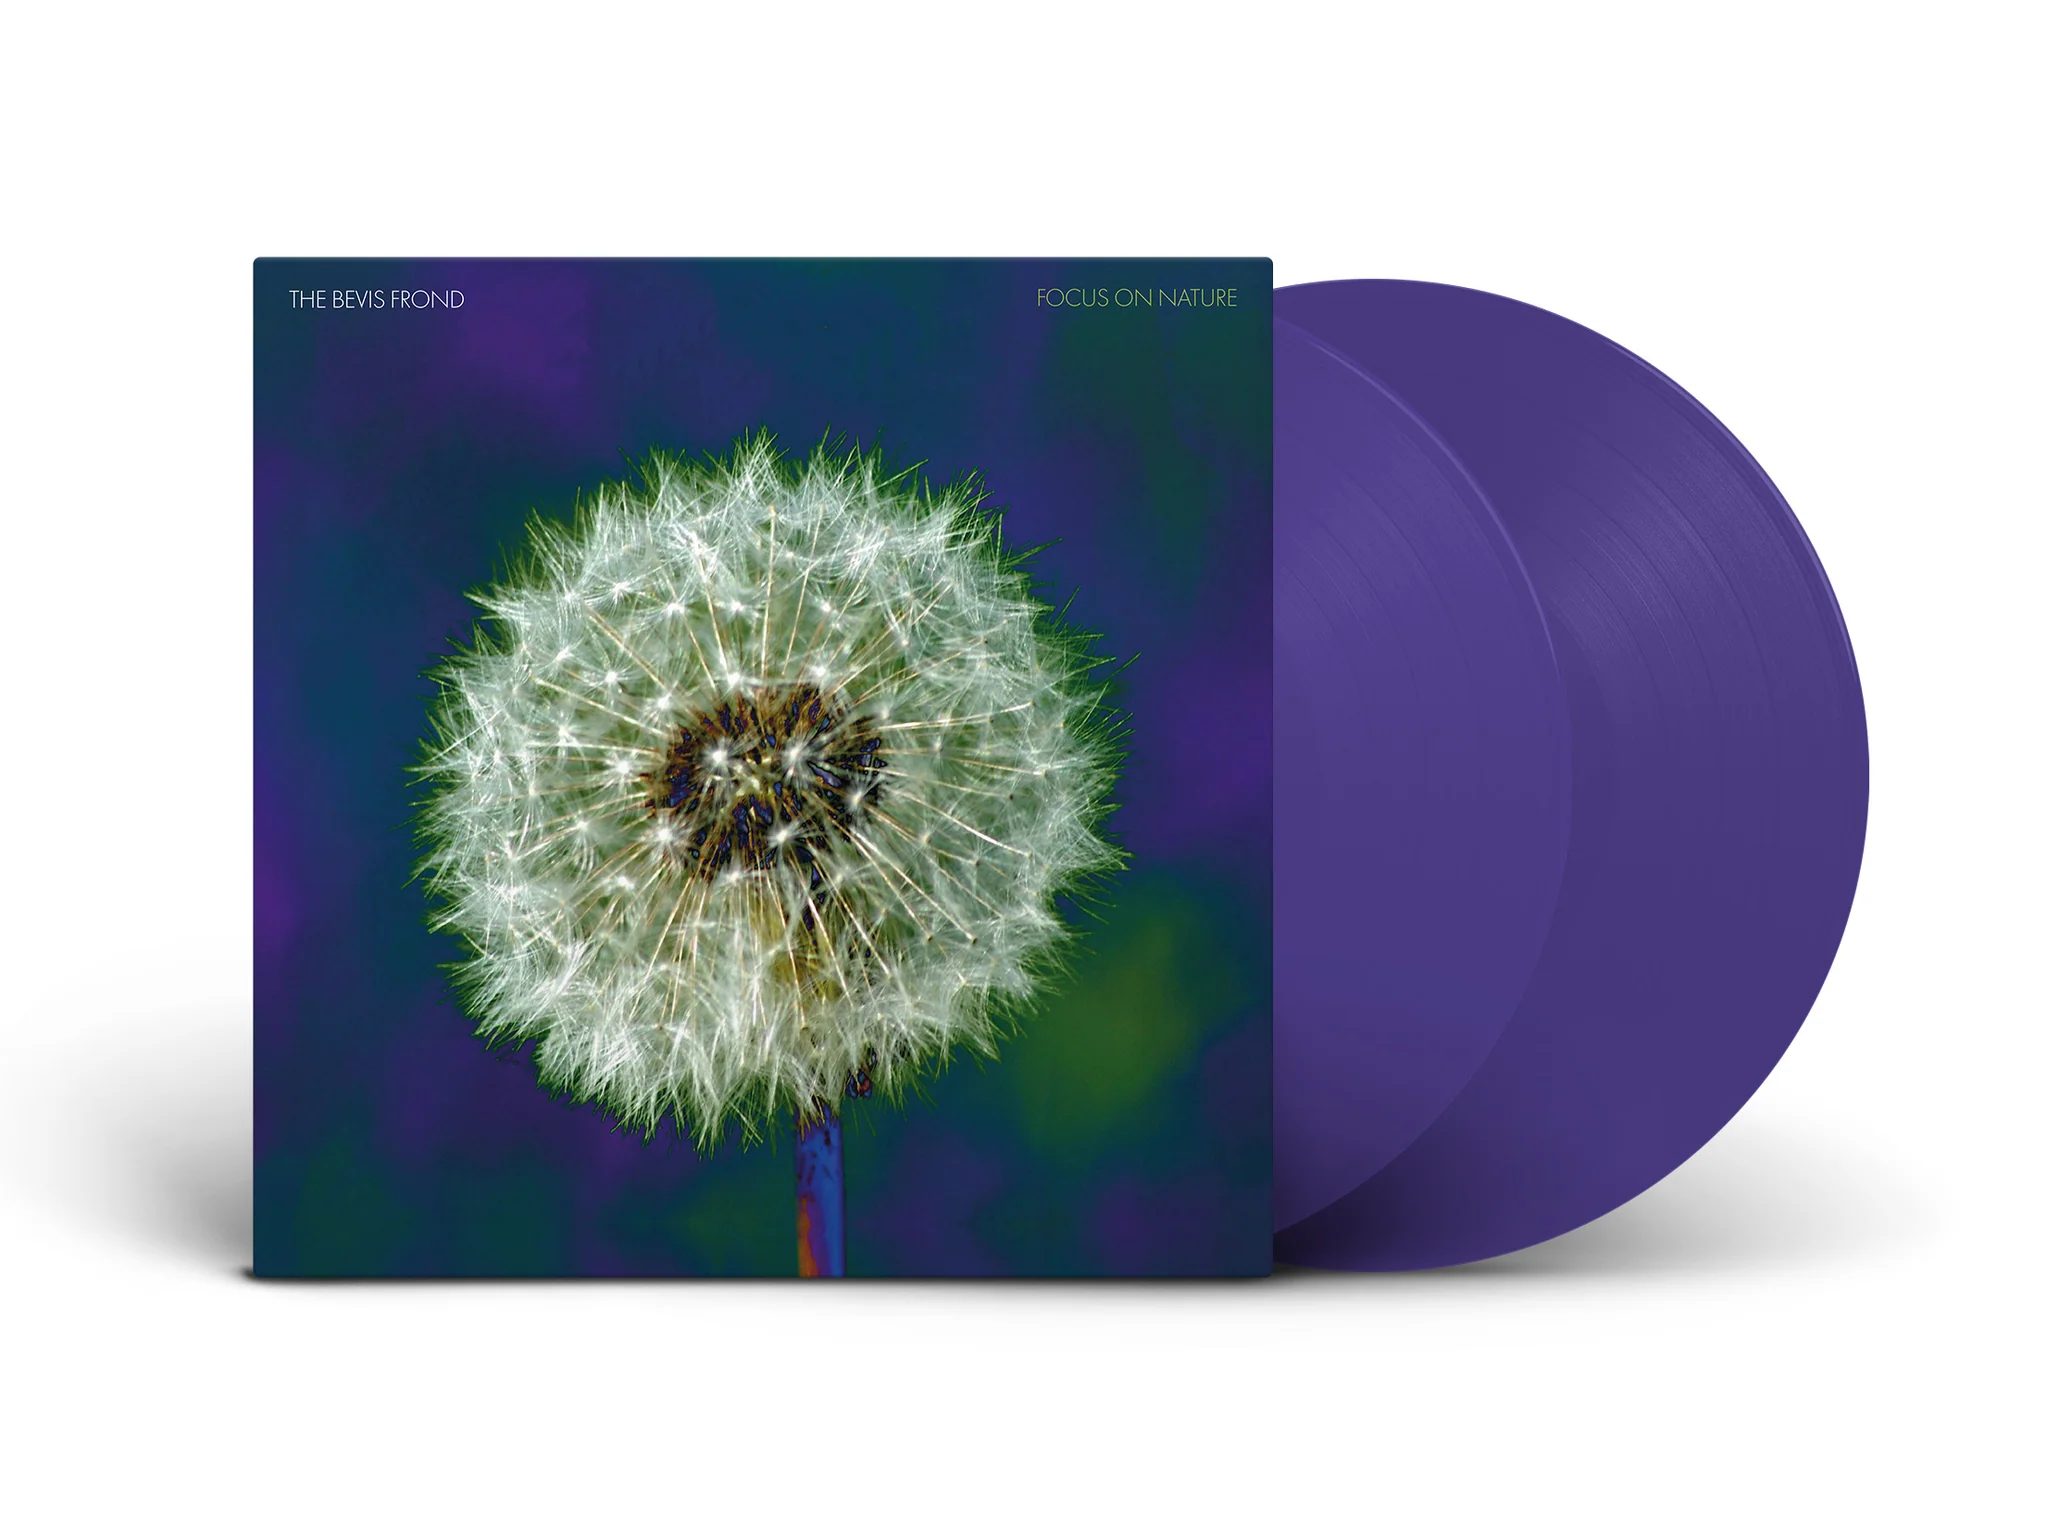 Focus on Nature album on purple vinyl